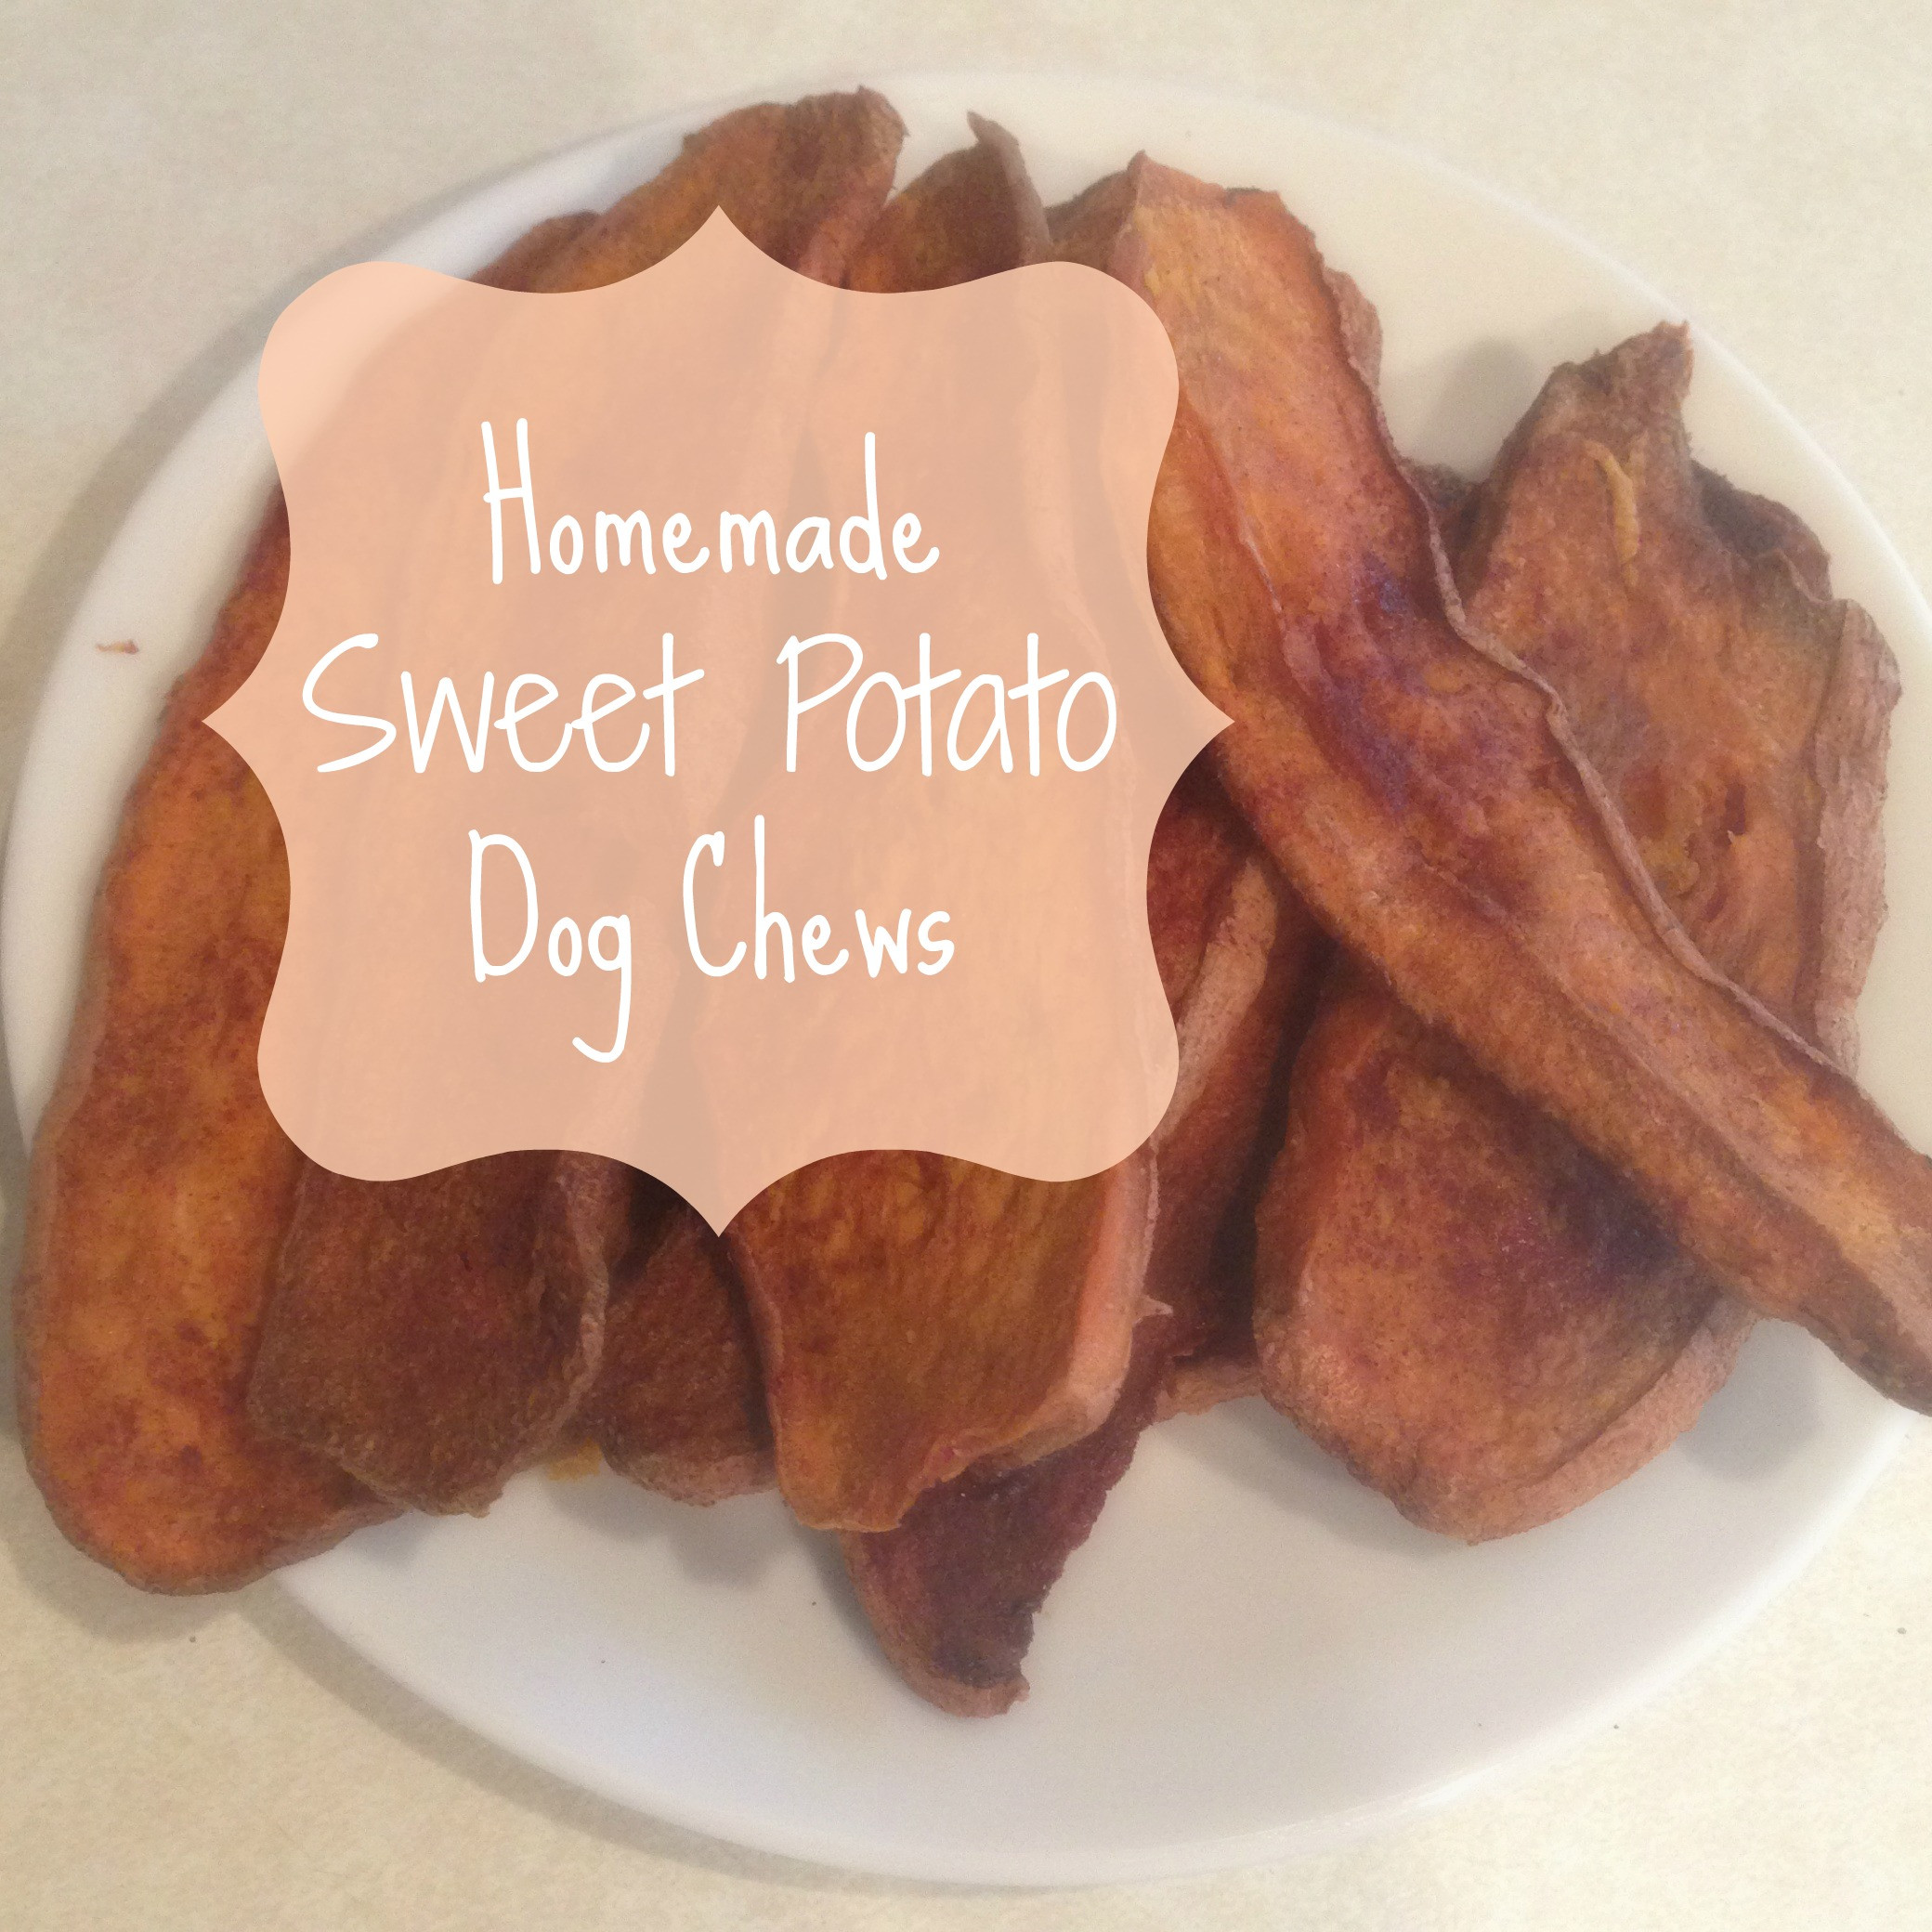 Sweet Potato Dog Chews
 Homemade Sweet Potato Dog Chews